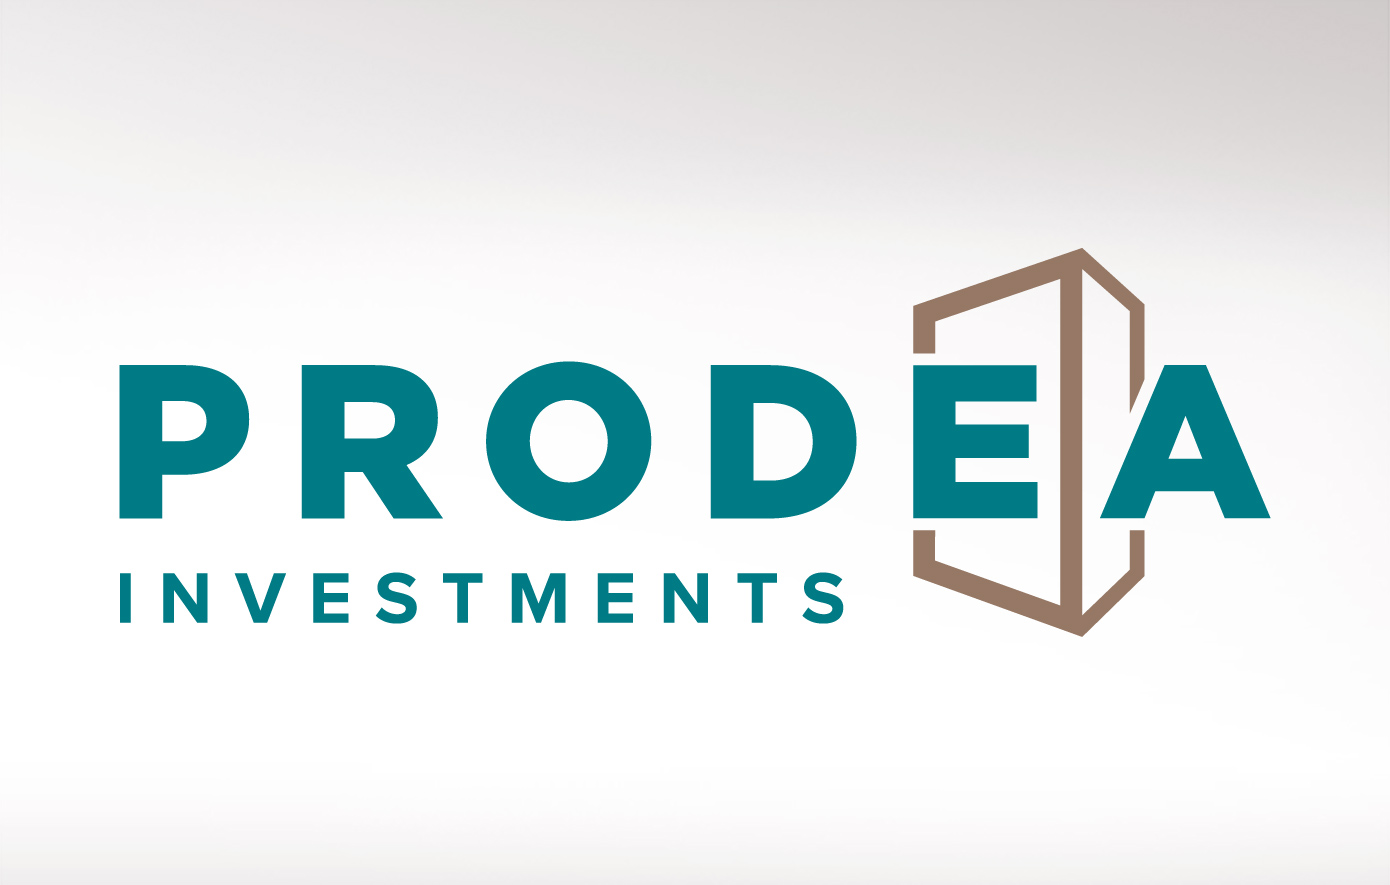 PRODEA Investments: Αύξηση εσόδων από μισθώματα κατά 10,3% για το 2023